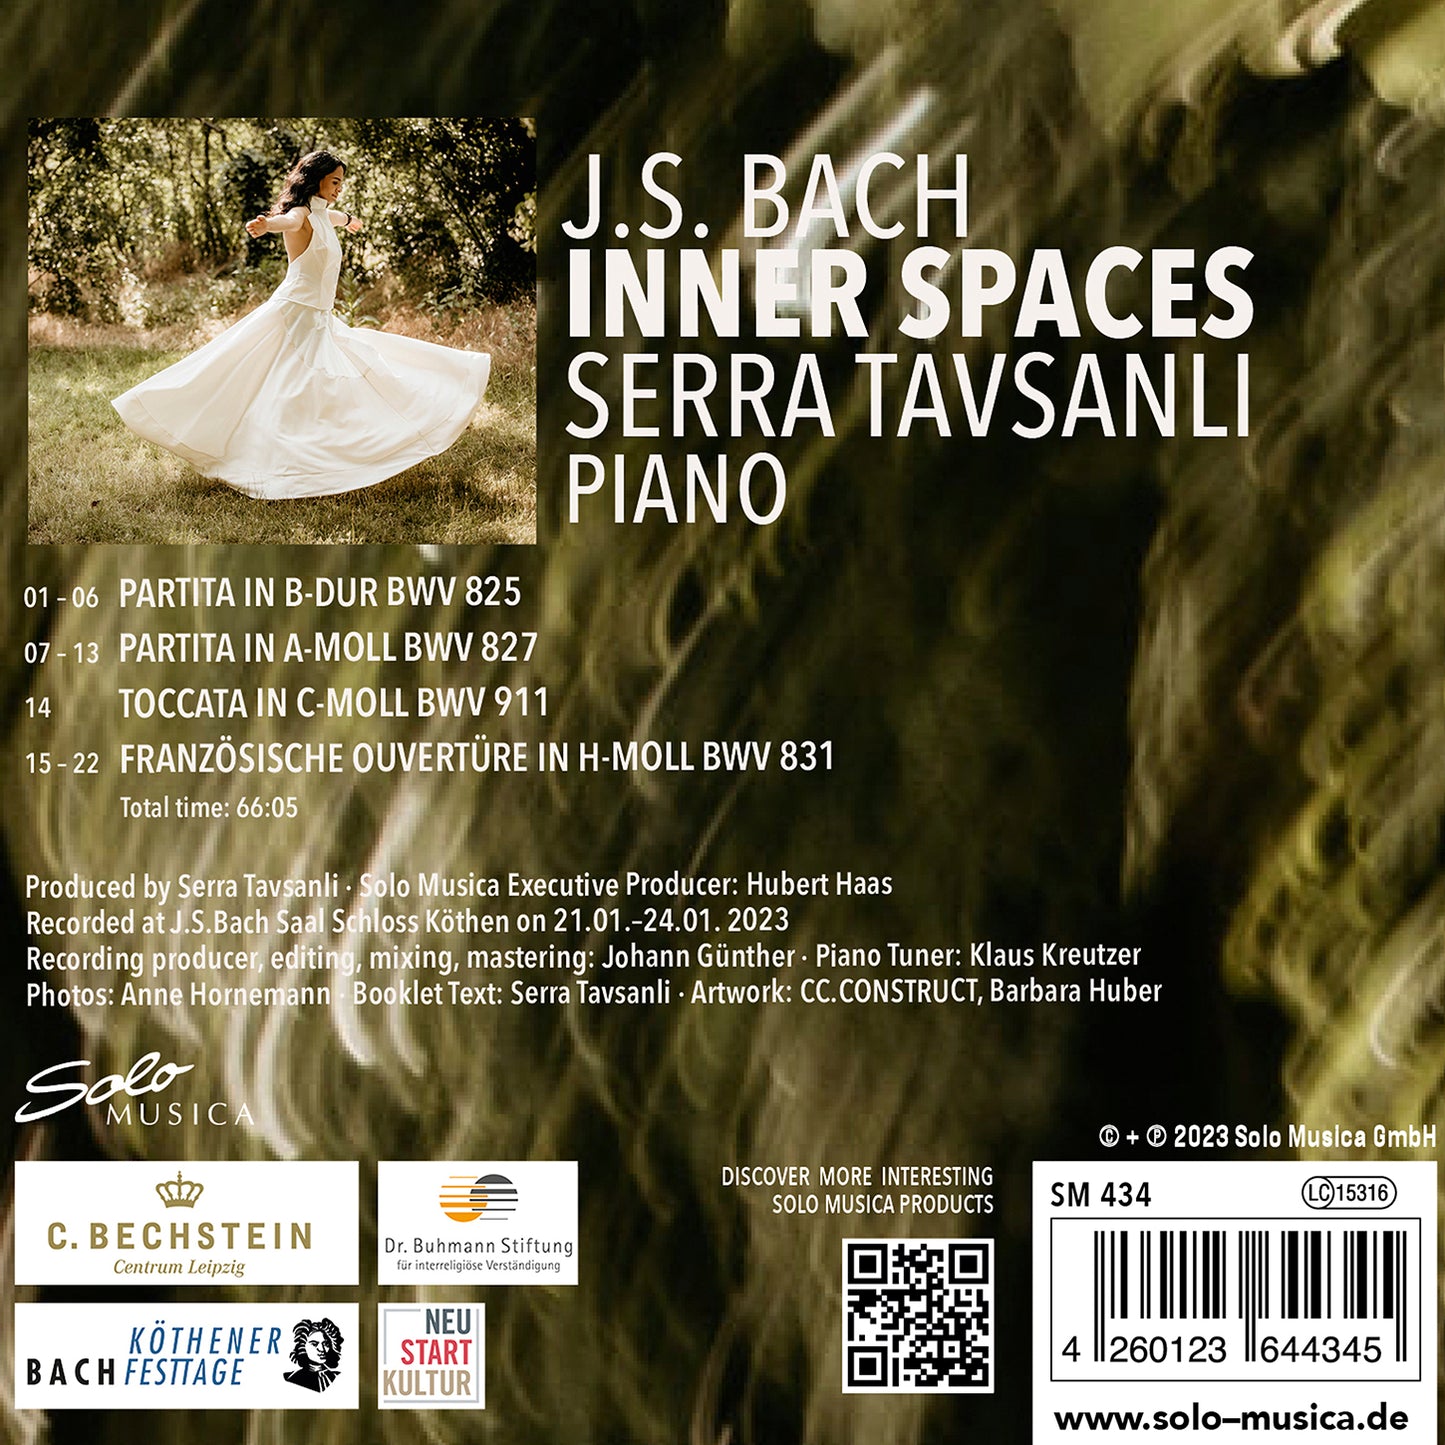 J.S. Bach: Inner Spaces  Serra Tavsanli